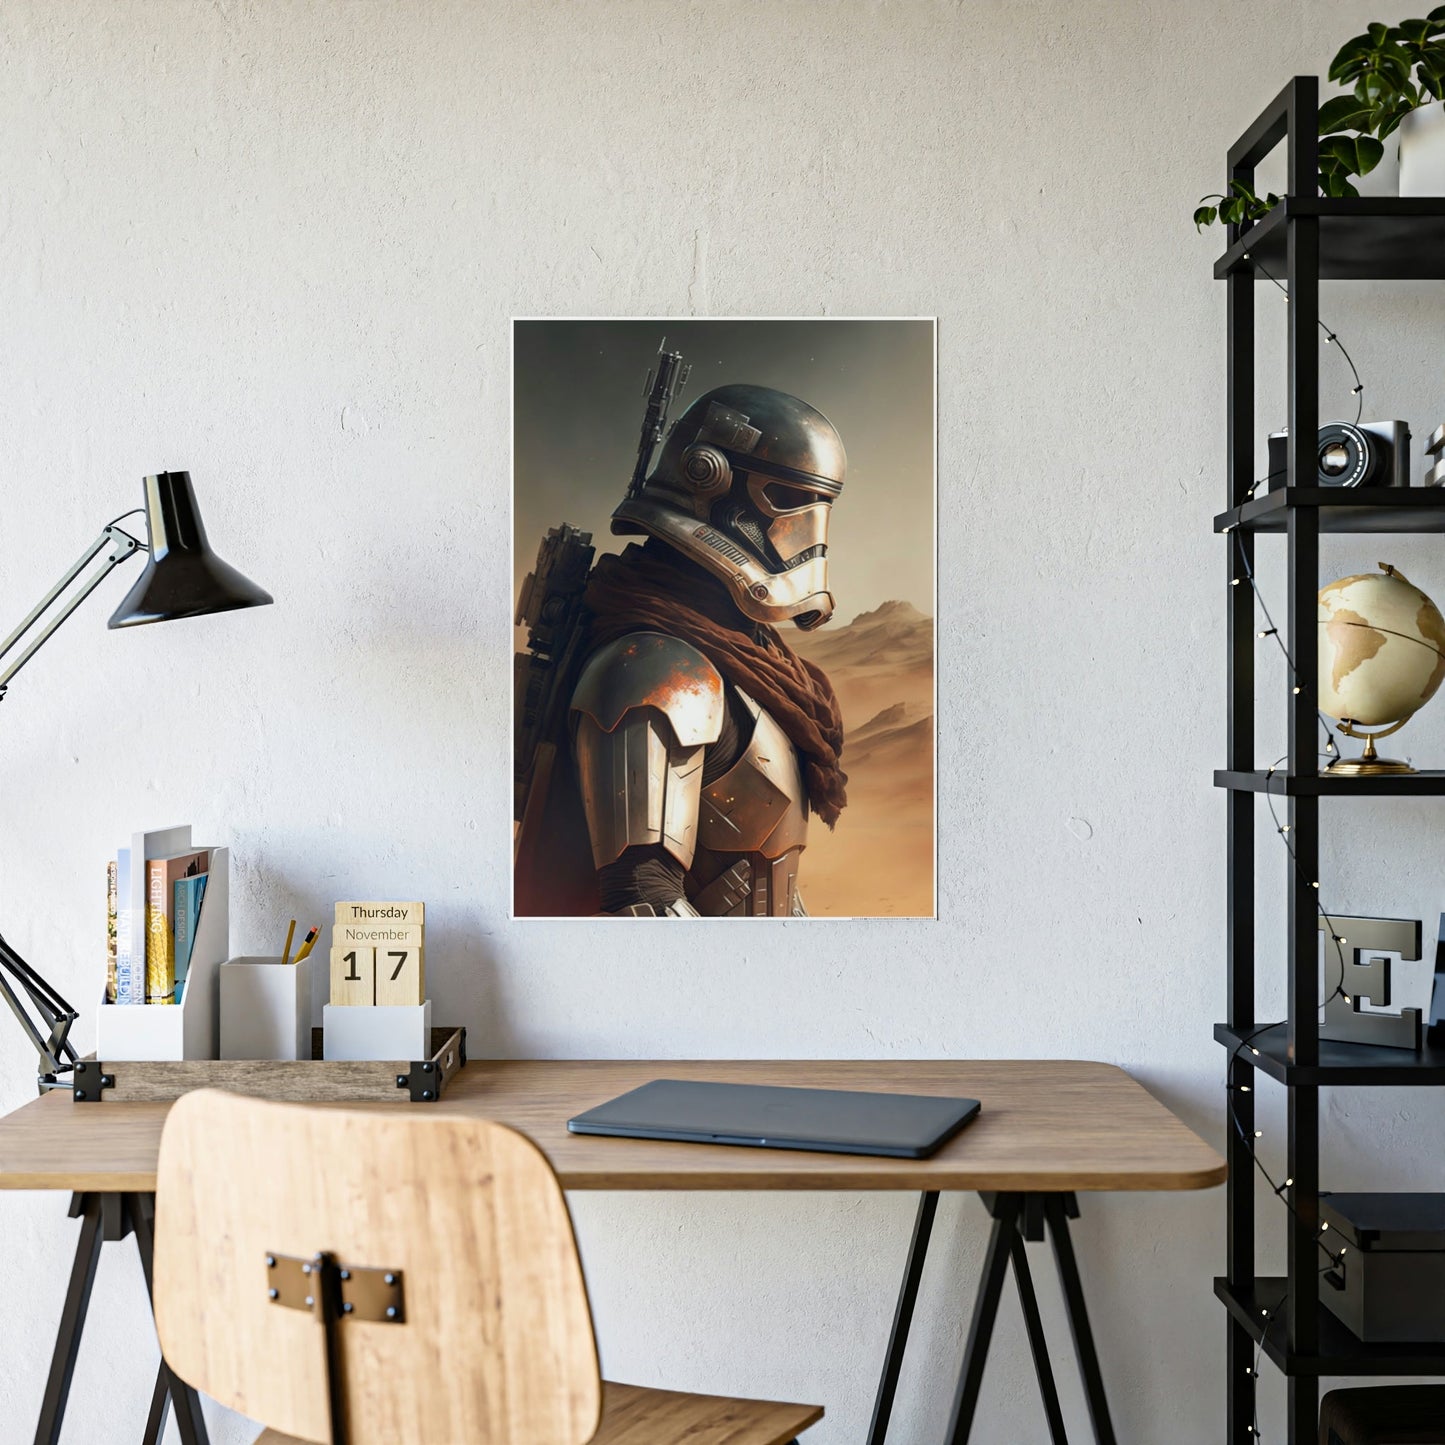 Galactic Empire Rises: Poster & Canvas Print of Star Wars Art